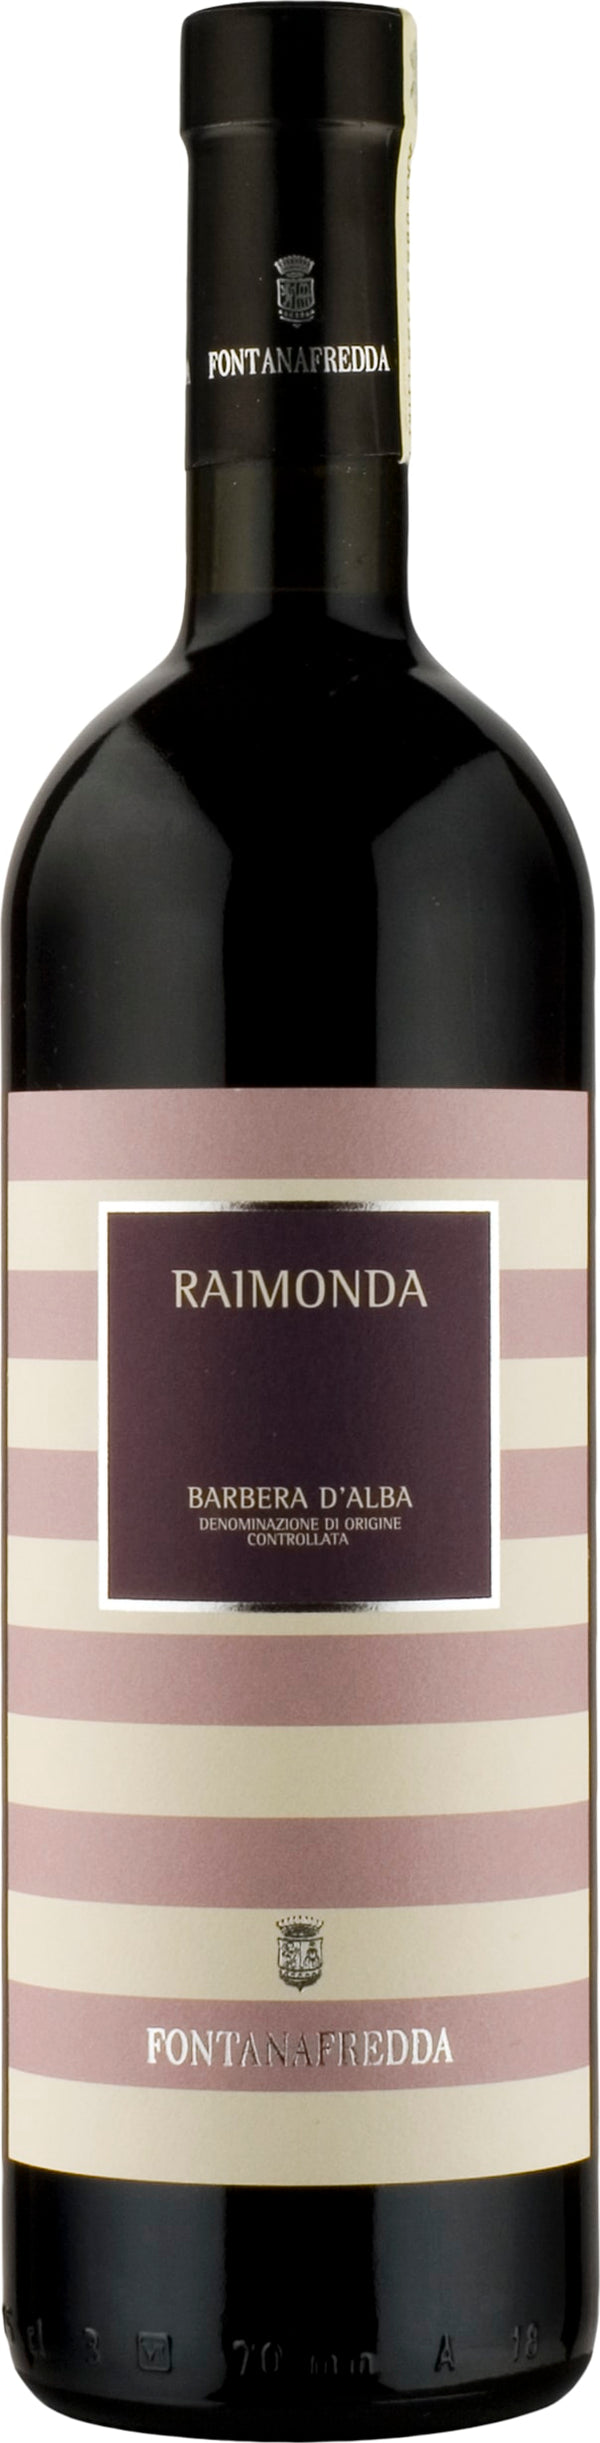 Fontanafredda Barbera dAlba DOC Raimonda 2021 6x75cl - Just Wines 